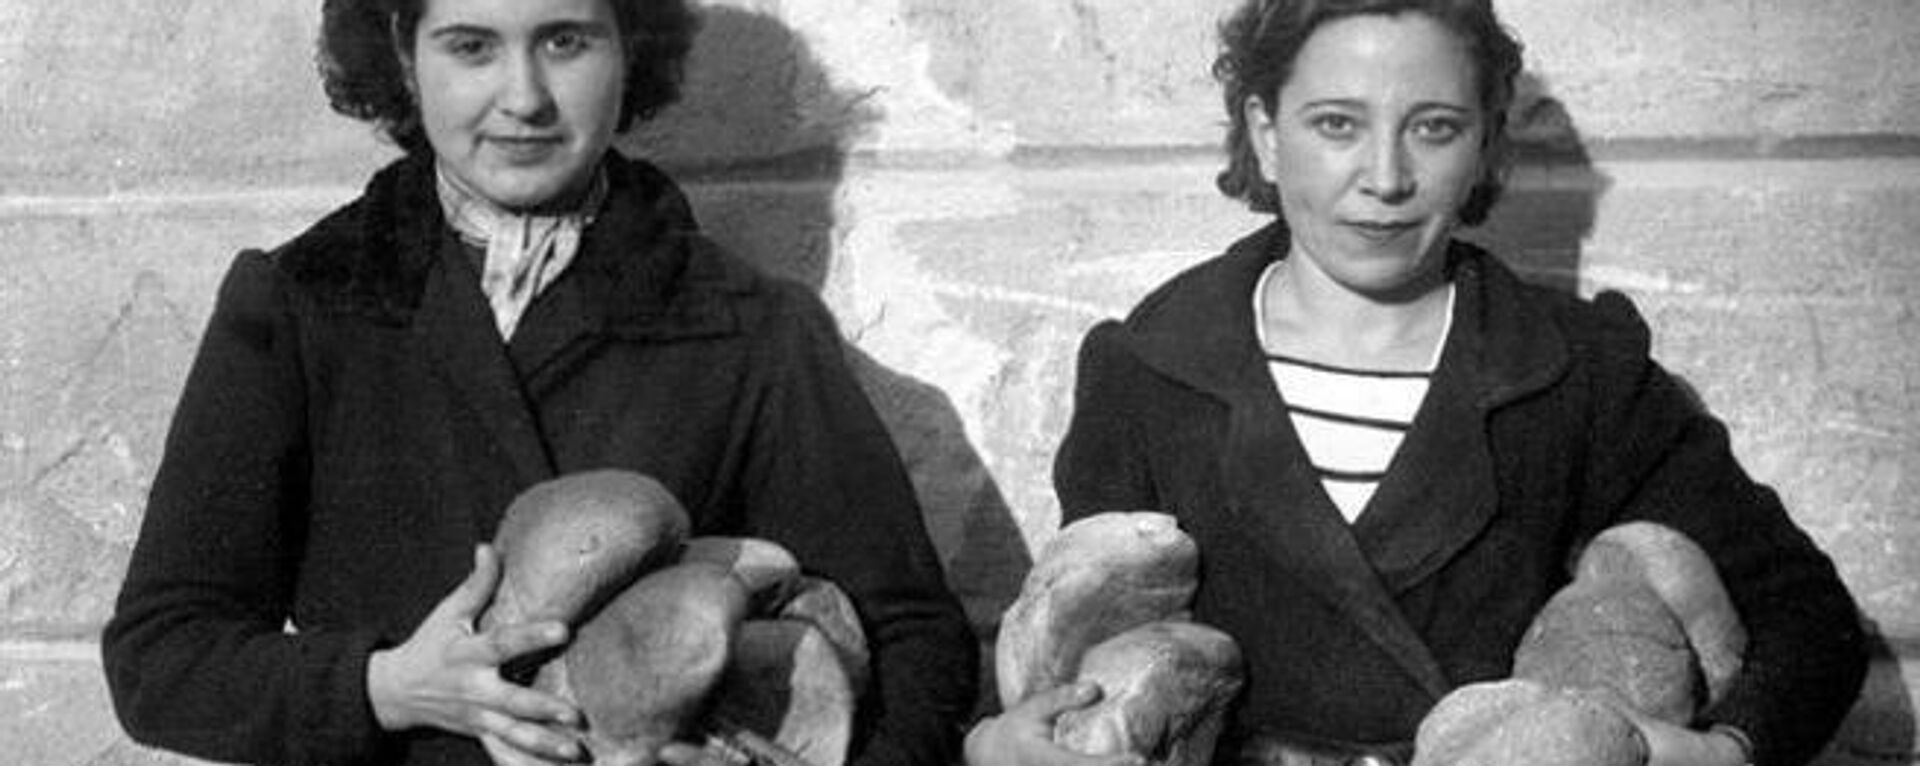 Mujeres con pan tras la Guerra Civil española - Sputnik Mundo, 1920, 20.01.2022